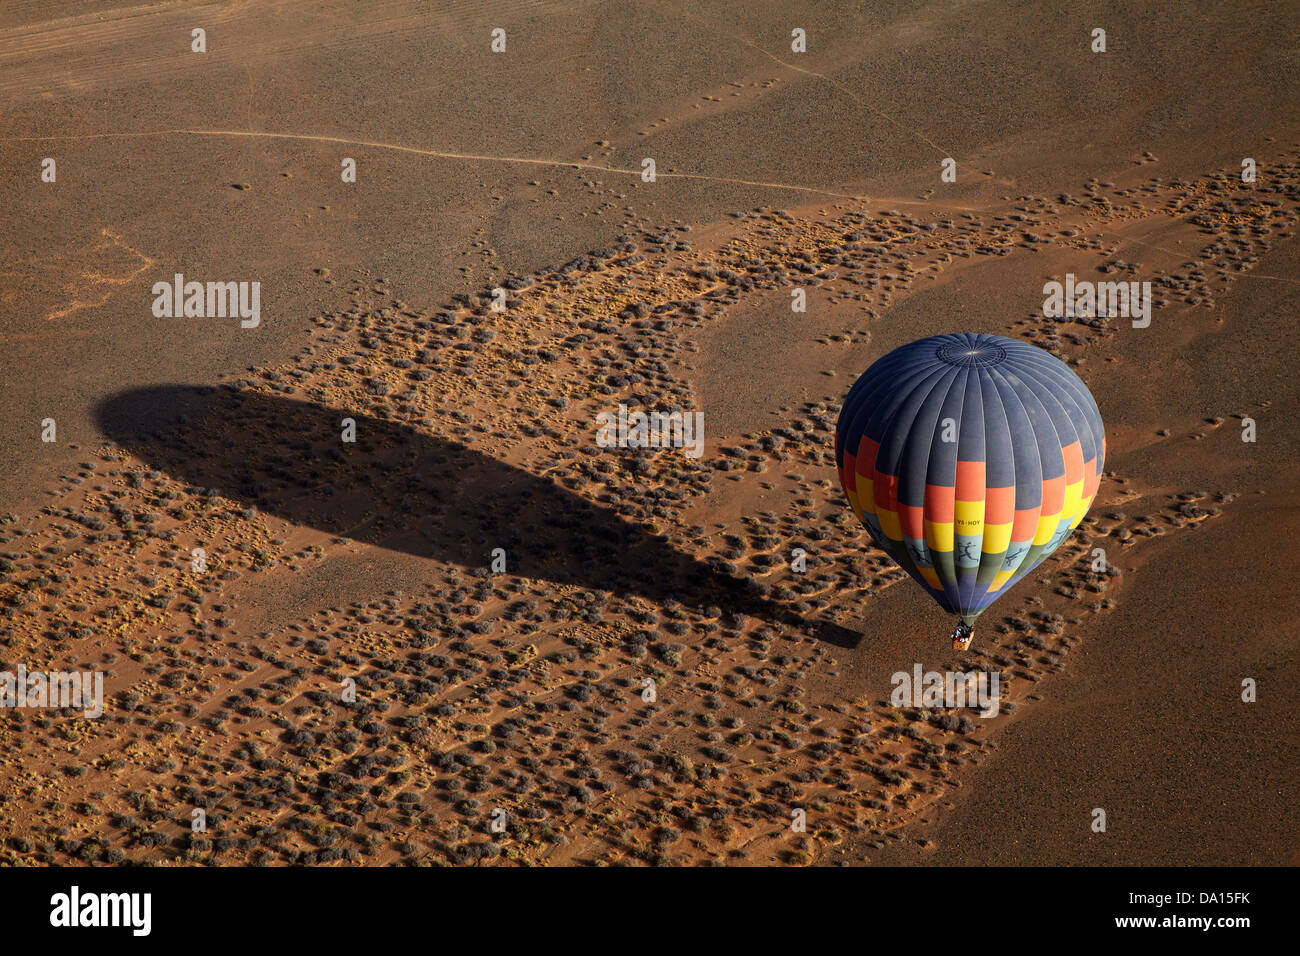 Hot air balloon over Namib Desert, near Sesriem, Namibia, Africa - aerial Stock Photo